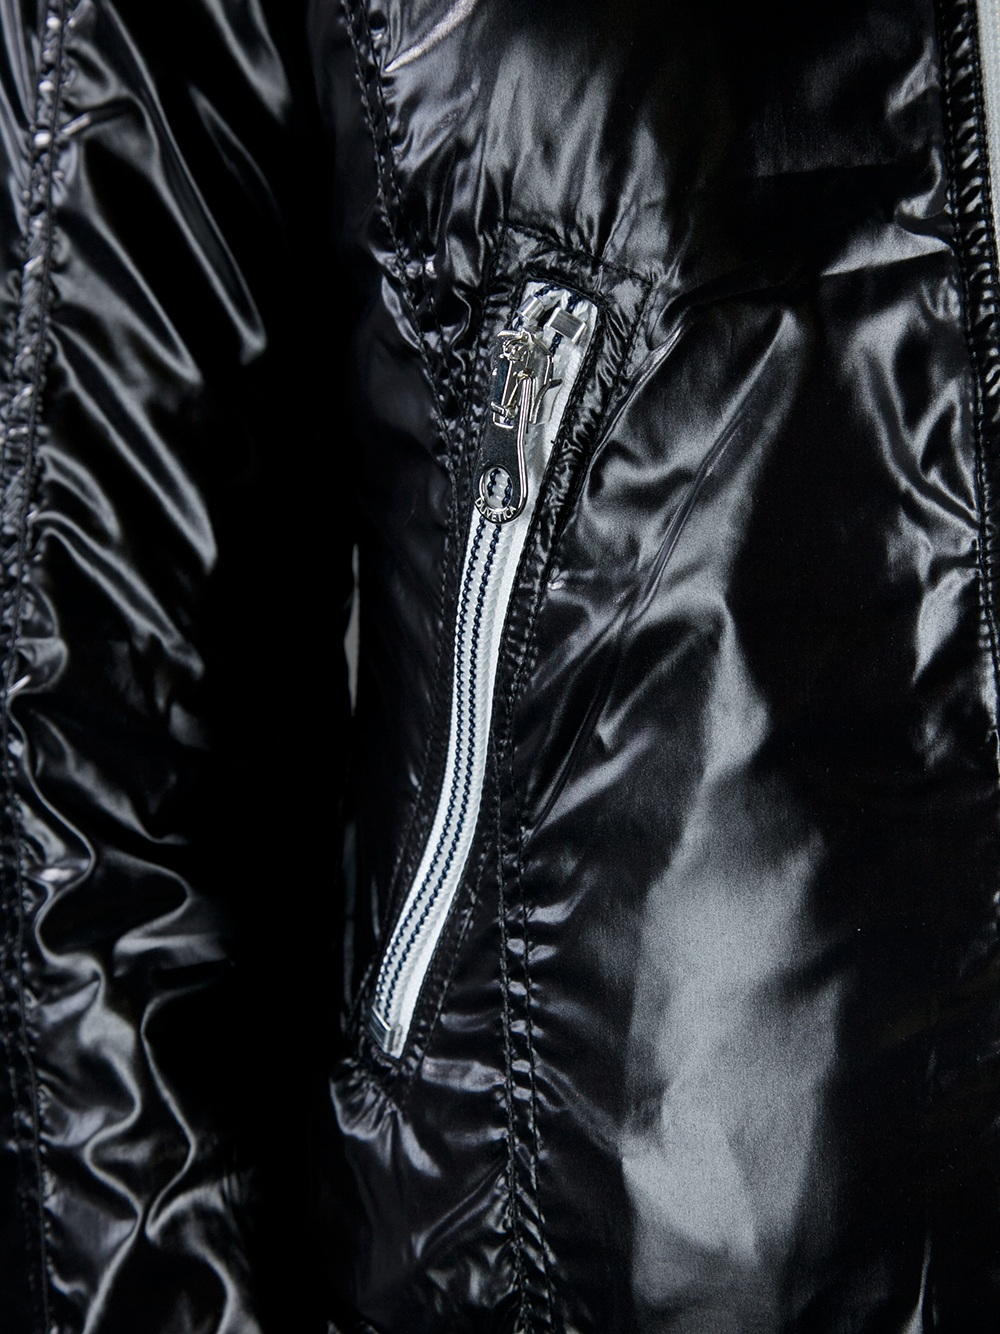 Duvetica Shiny Jacket in Black | Lyst